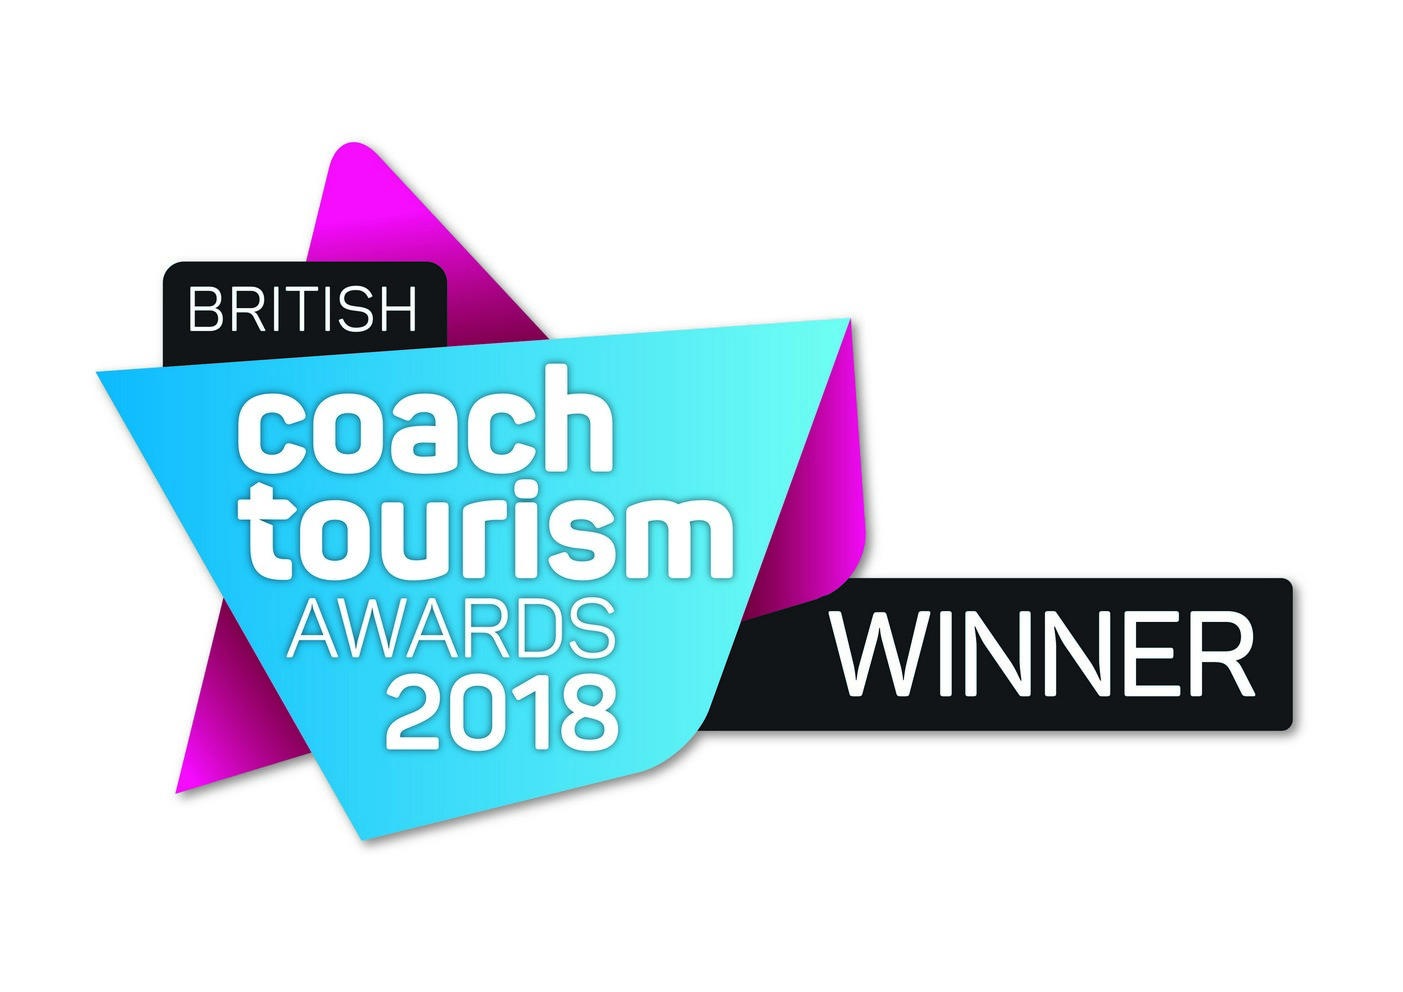 British Coach Tourism Awards 2018